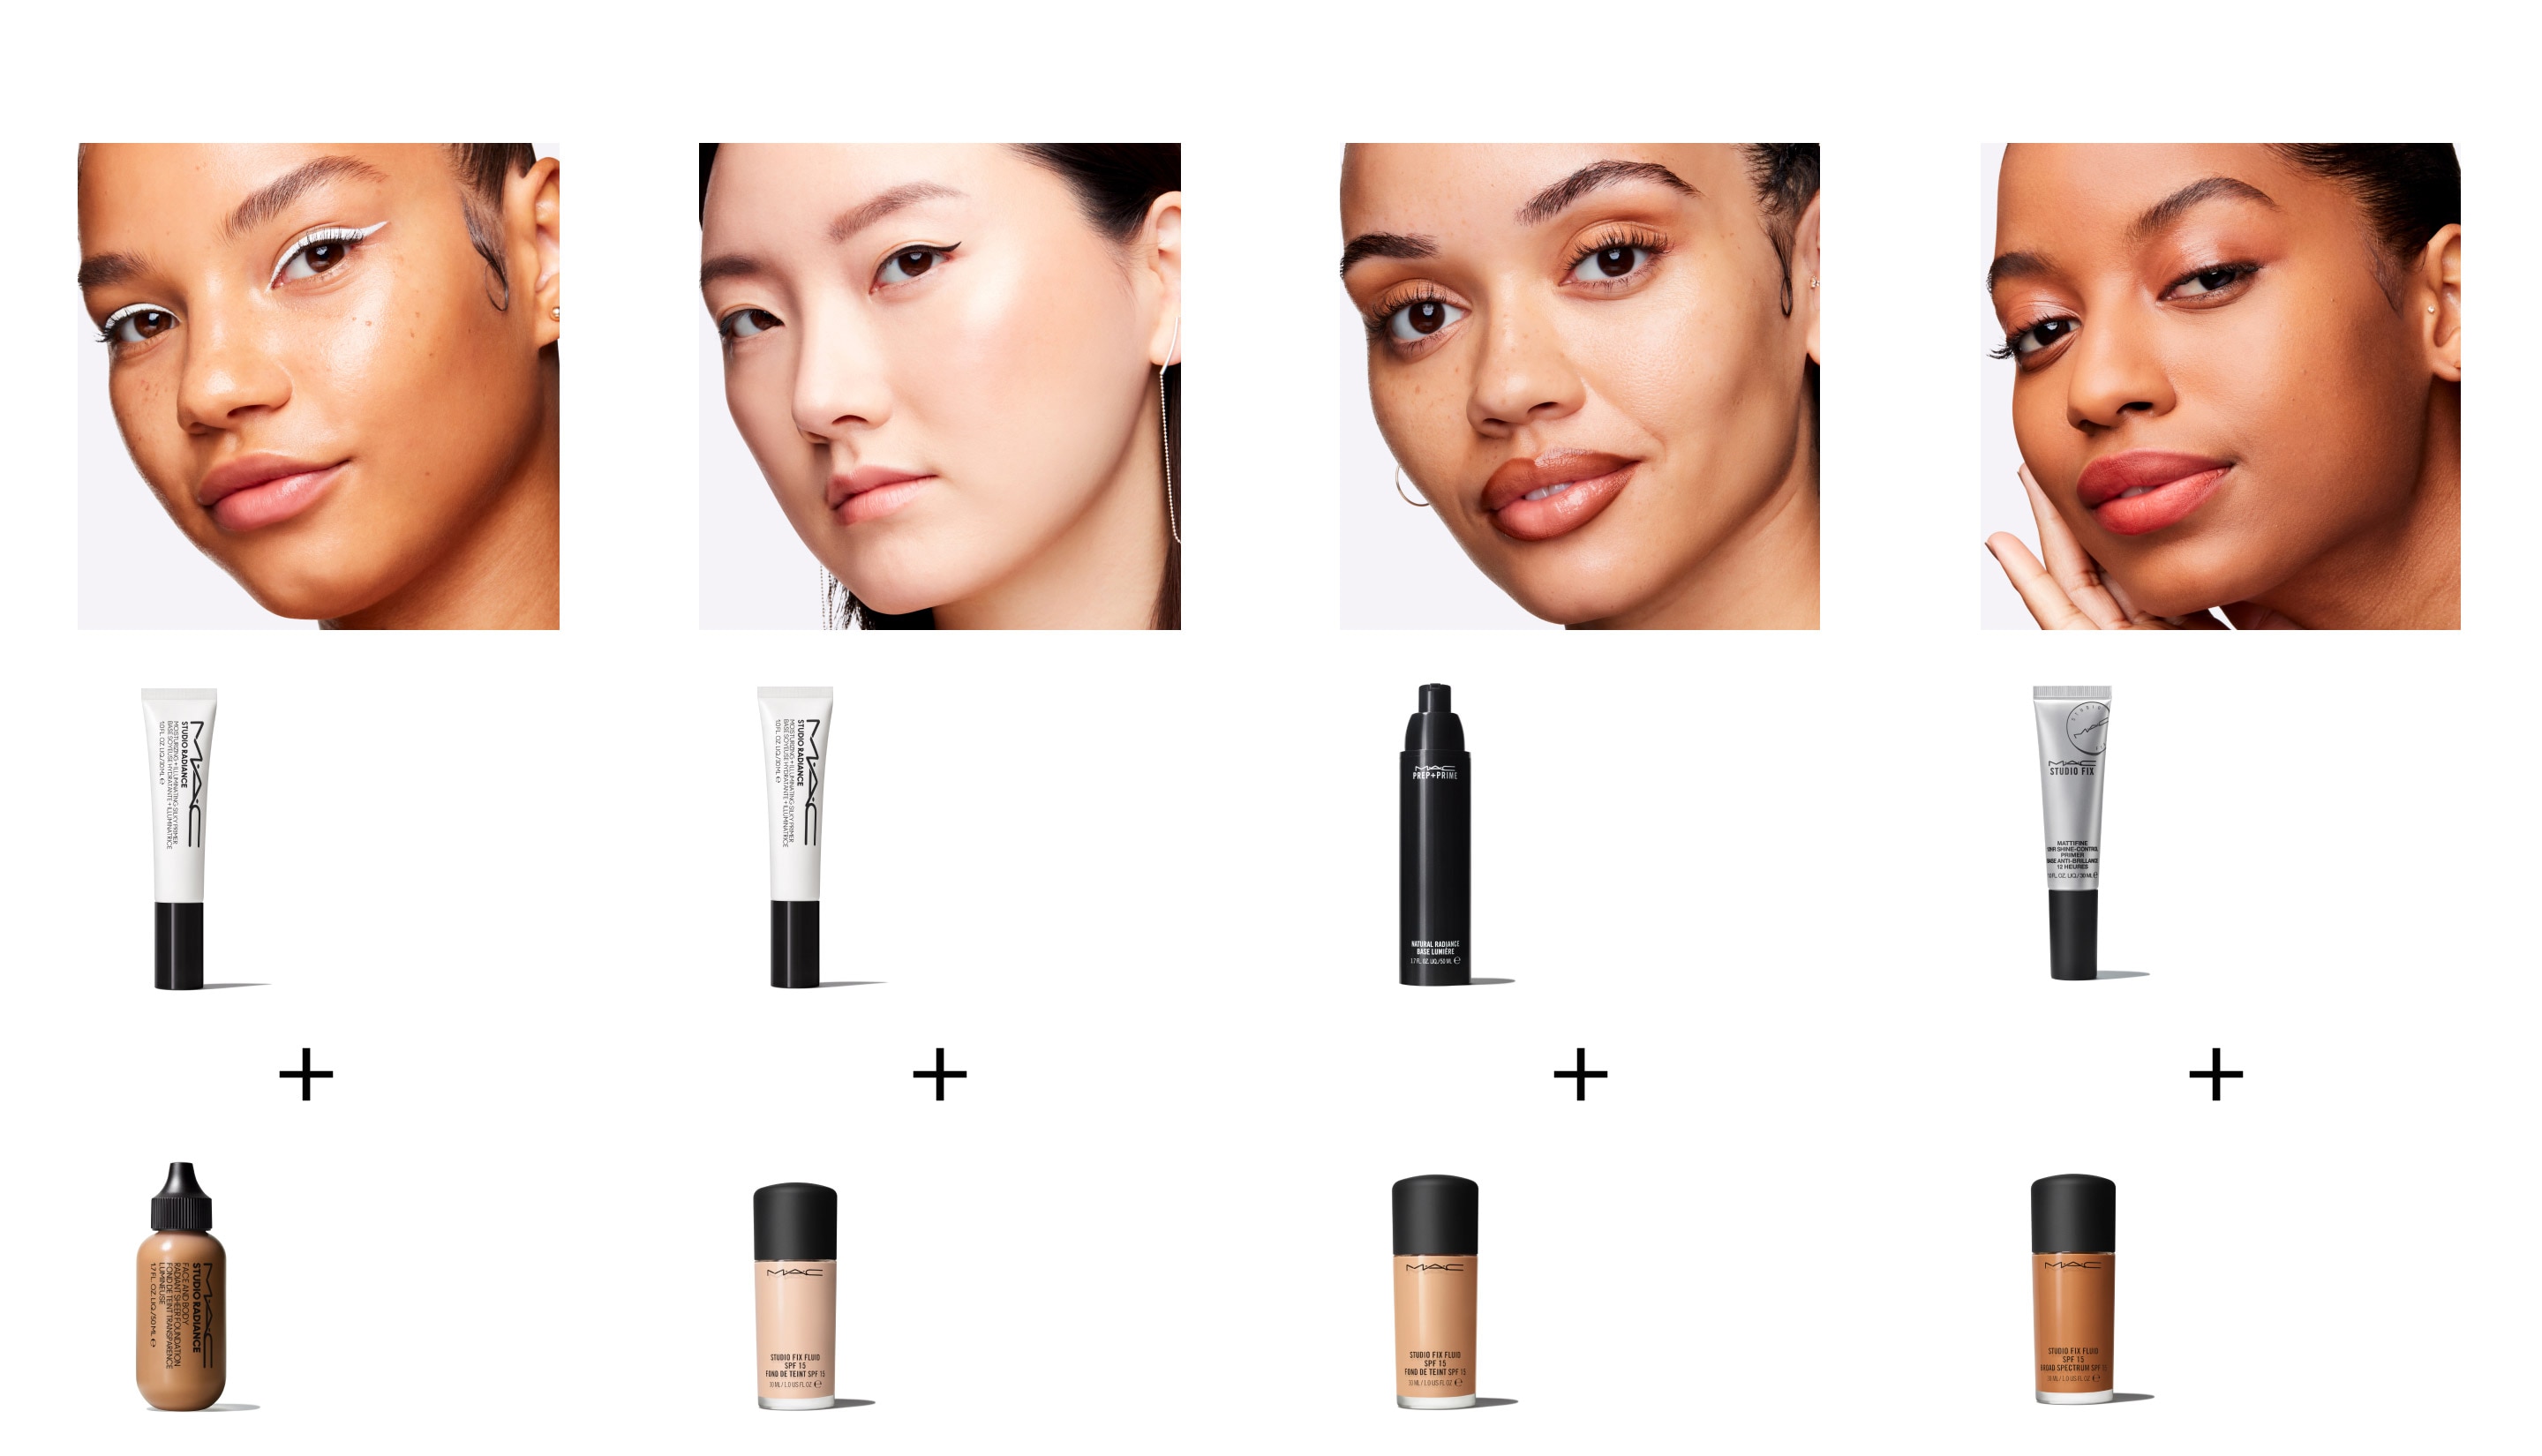 MAC Studio Face And Body Foundation – 120ml, M∙A∙C Cosmetics